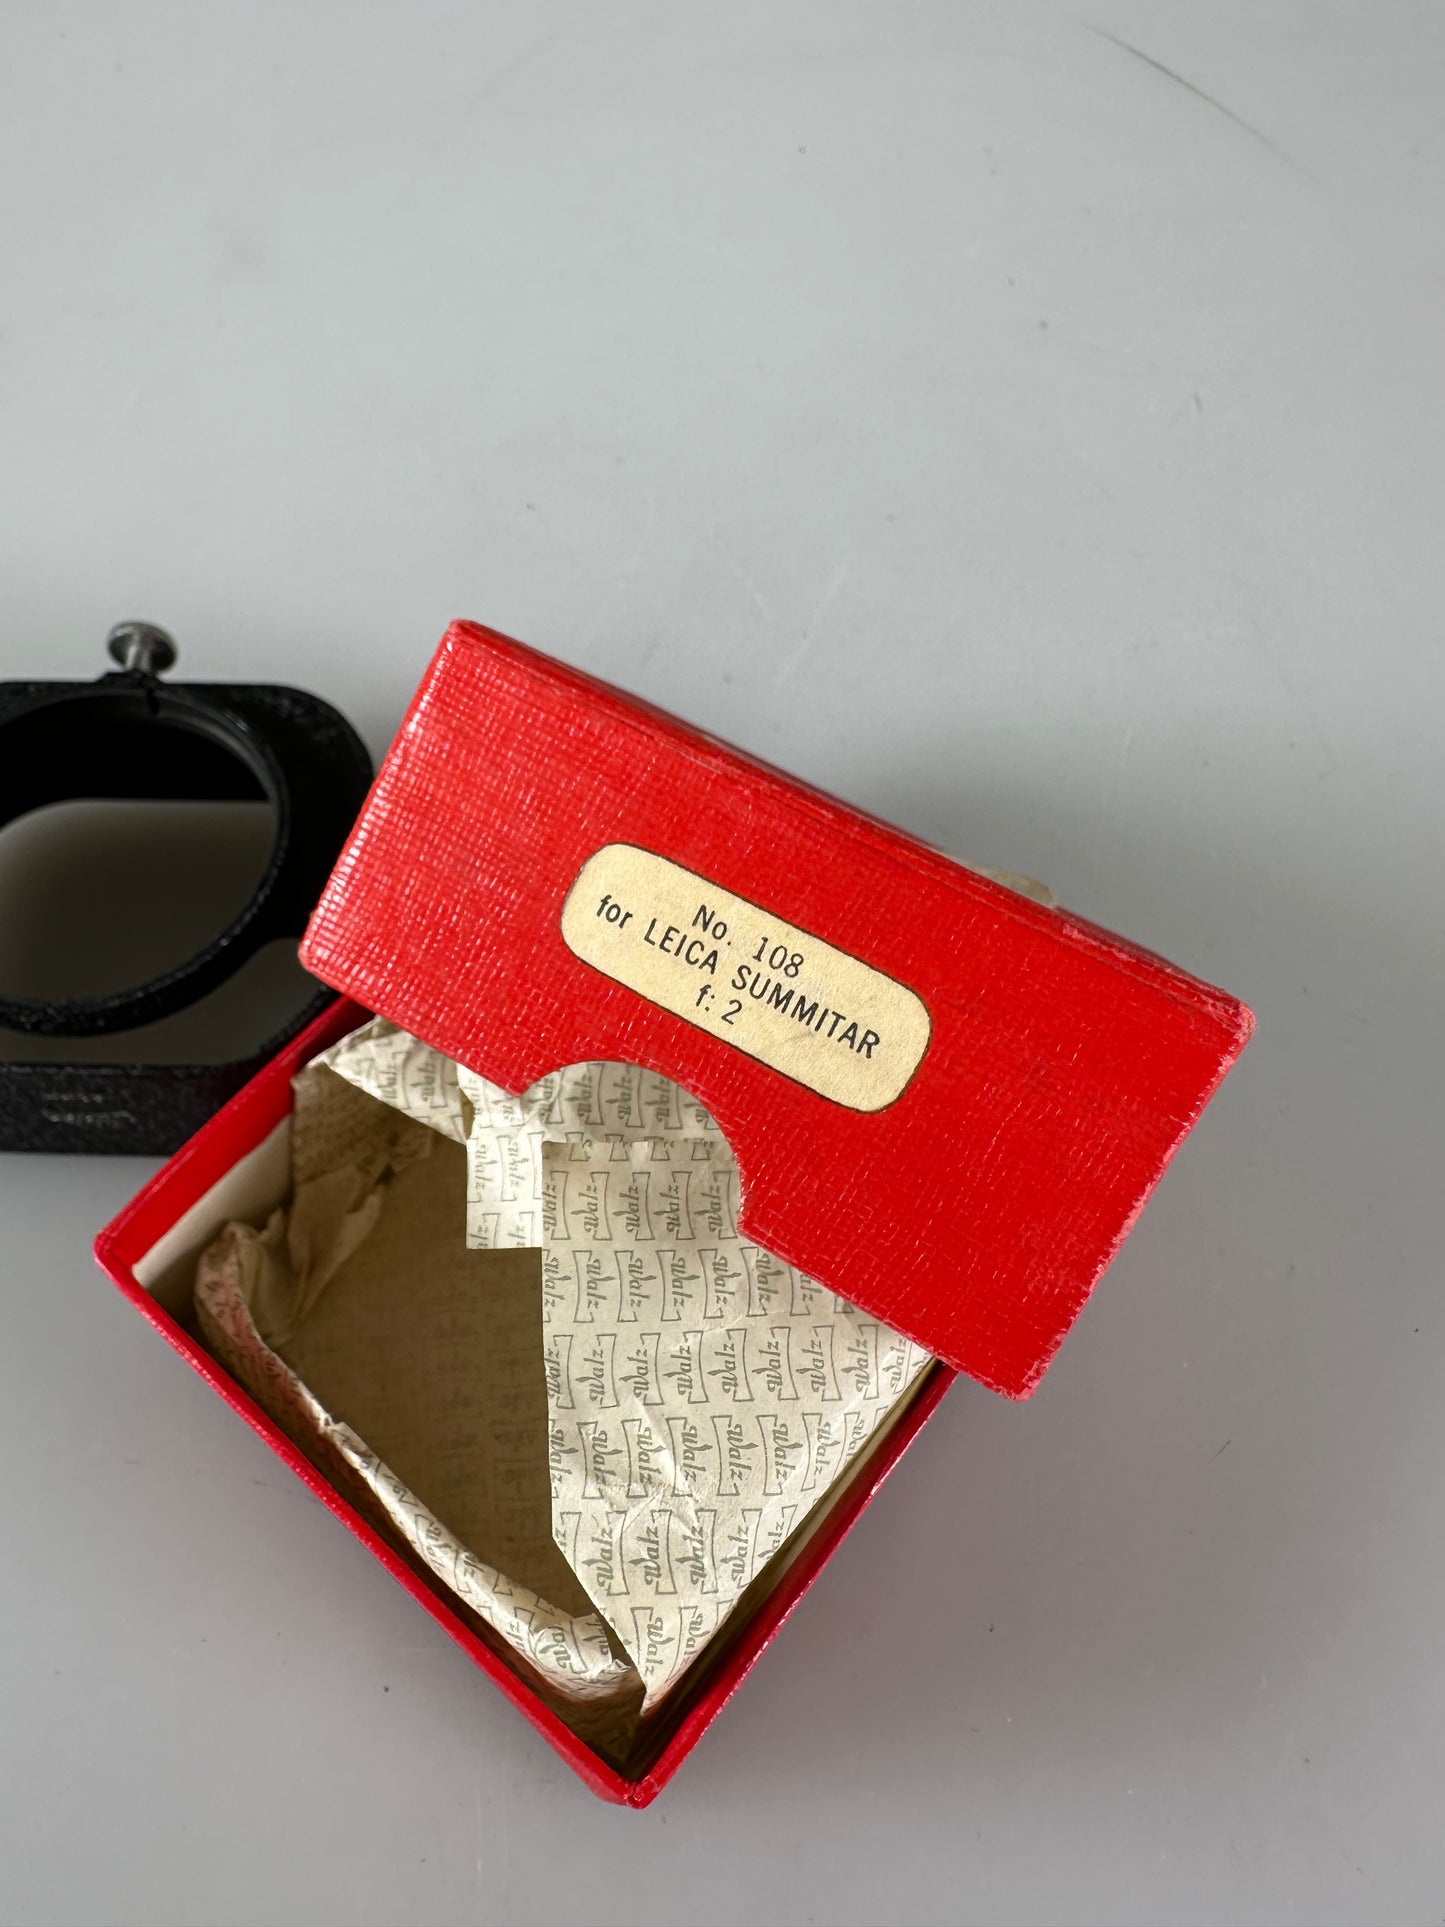 Walz 44mm Crackle Hood Rare copy of Leica XOONS for summarit